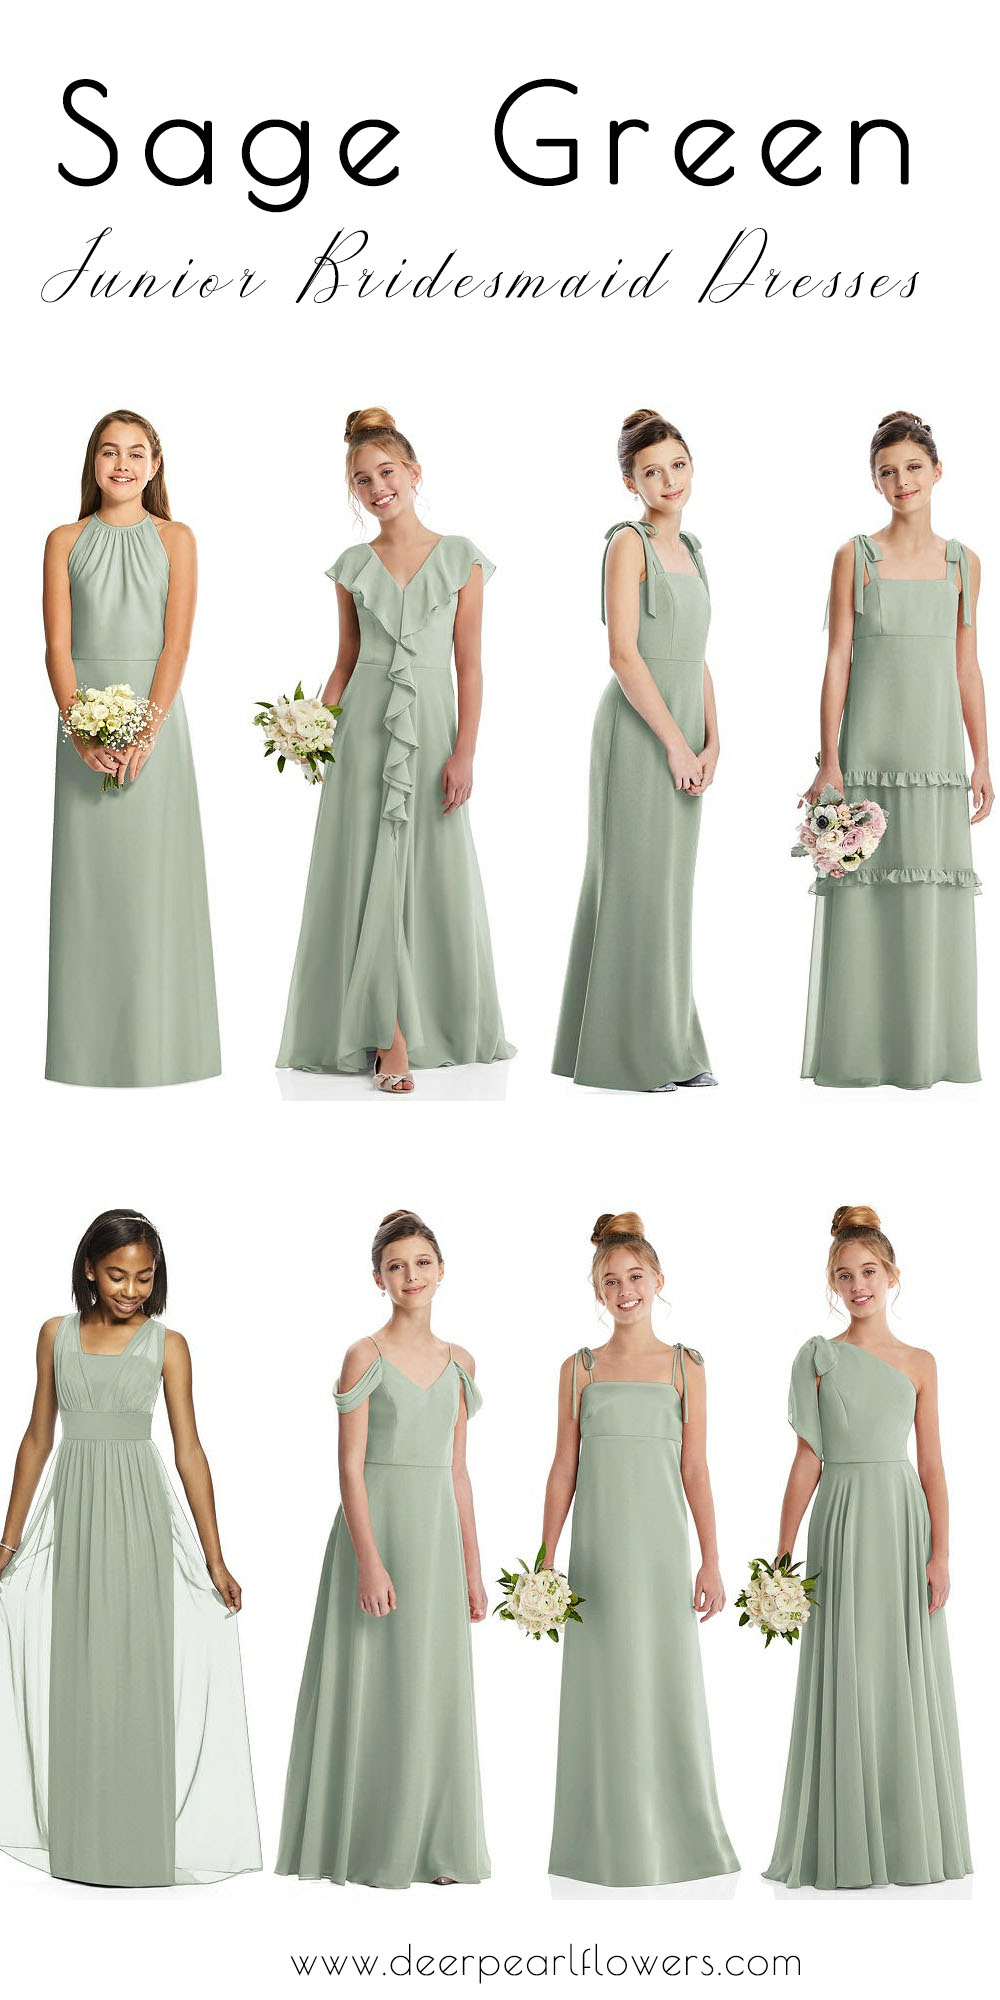 sage green junior bridesmaid dresses